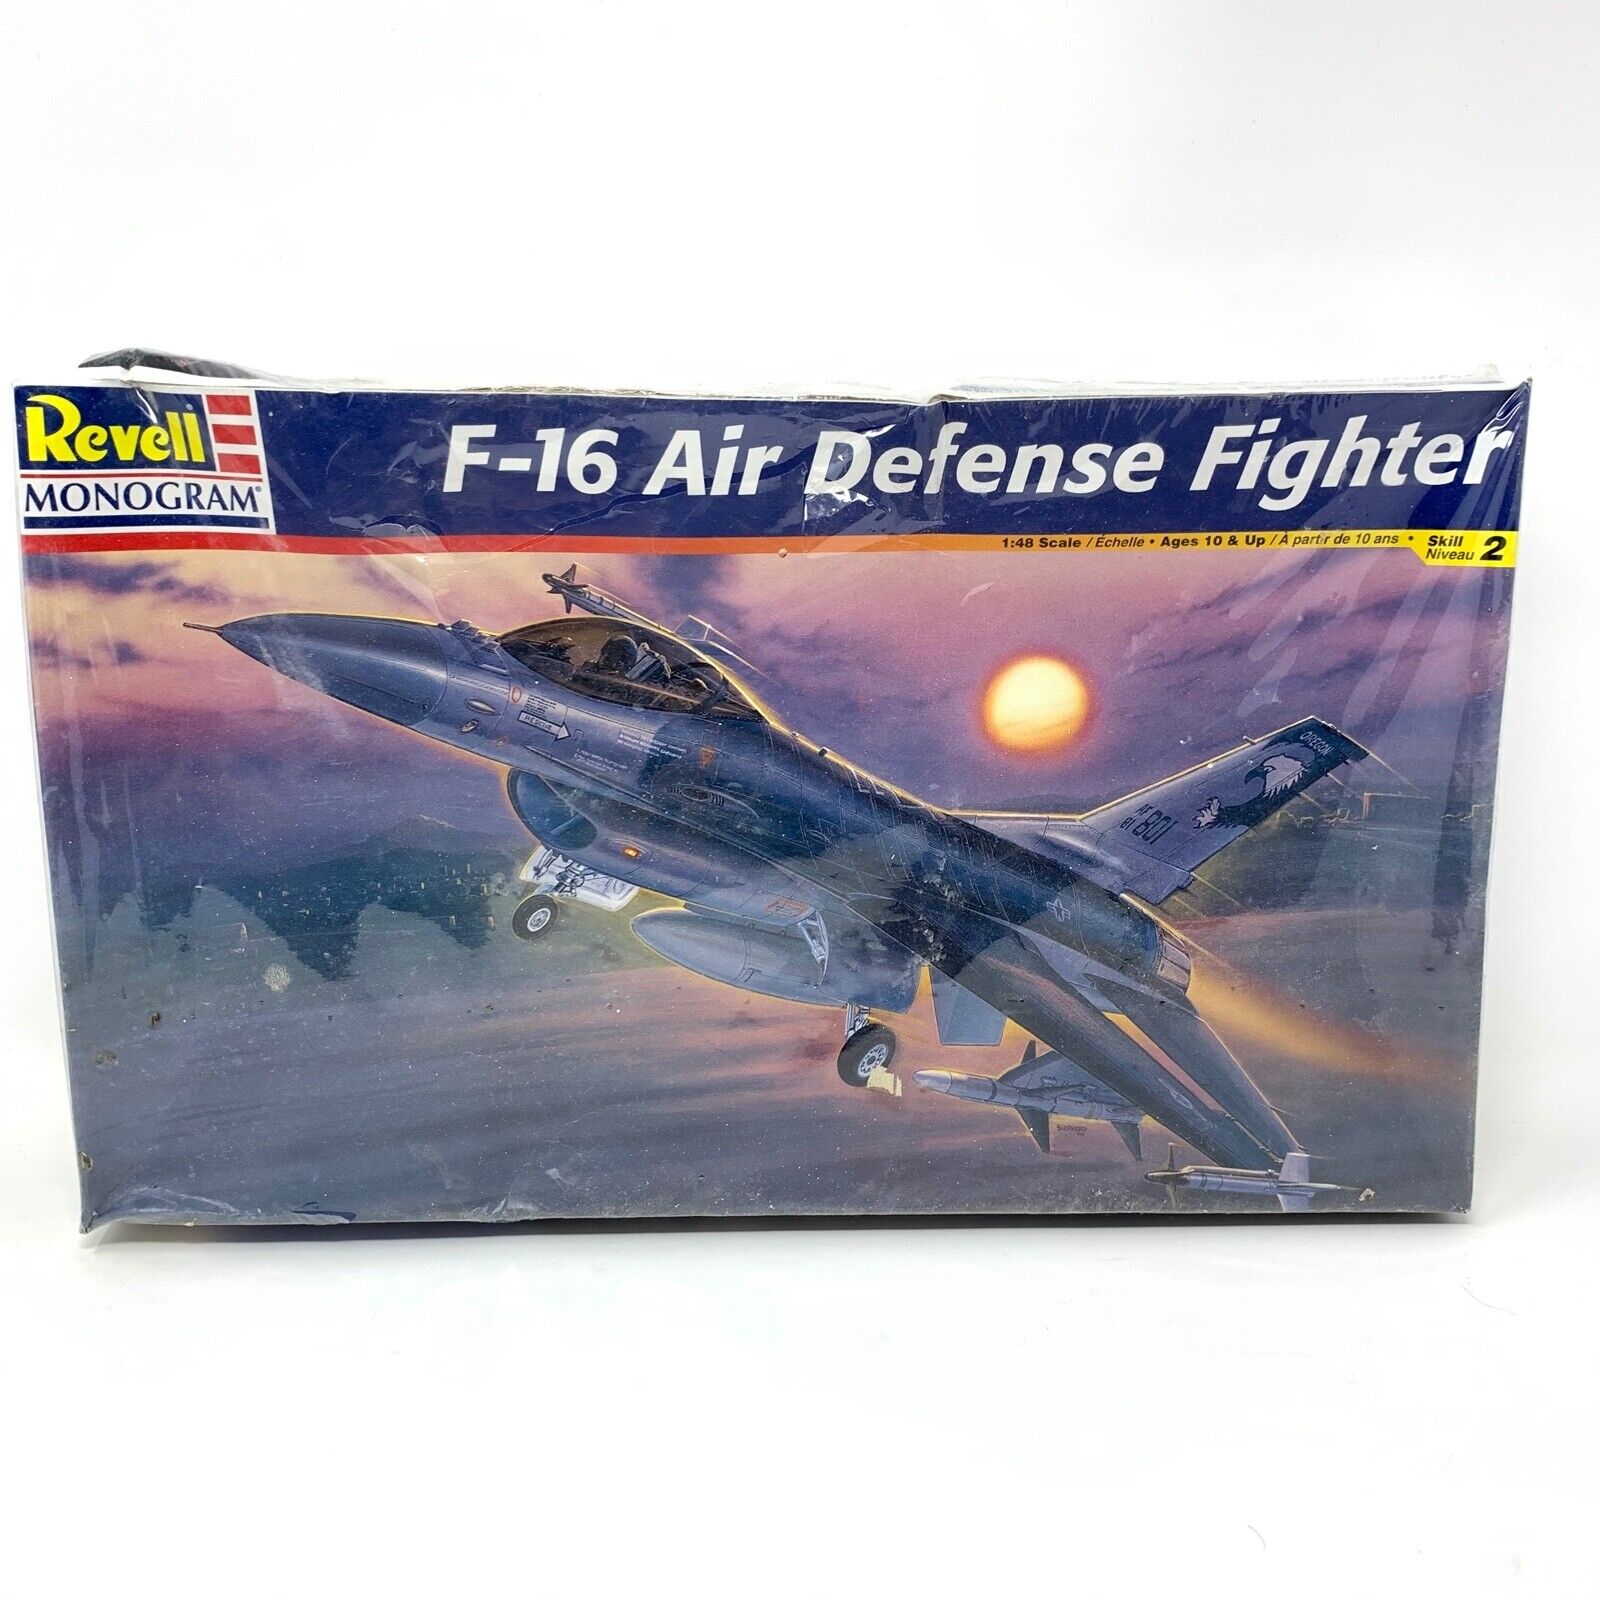 RARE Revell F-16 Air Defense Fighter 1:48 Scale Plastic Model Kit SEALED 1999